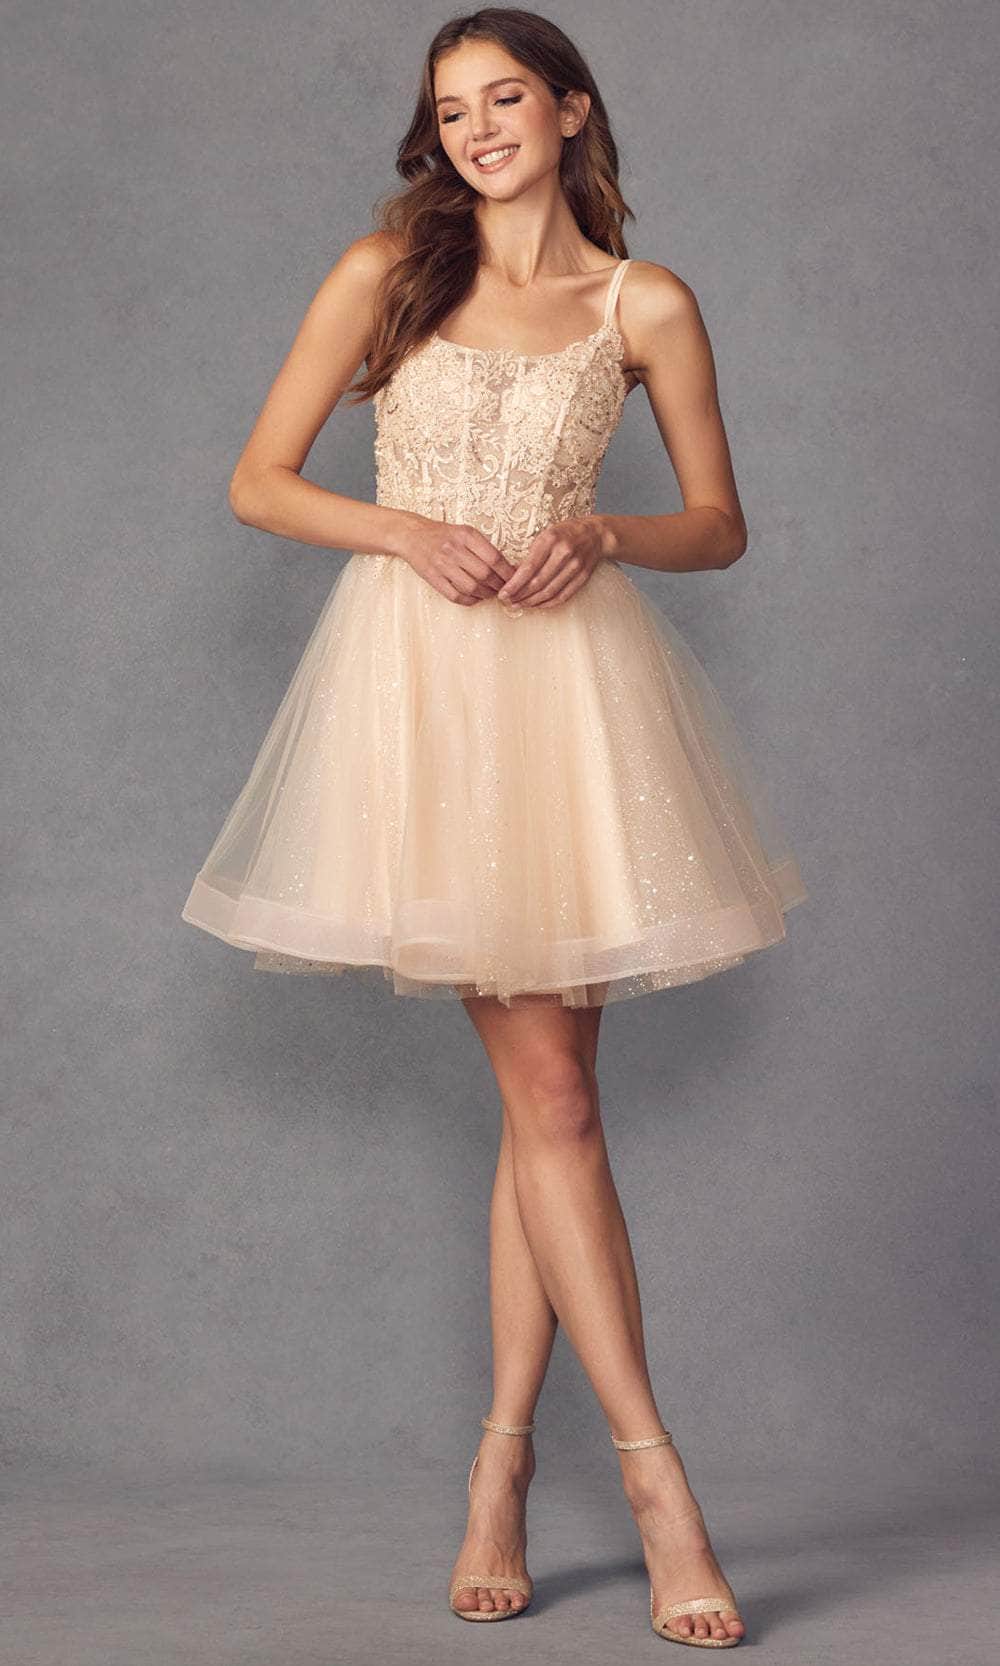 Image of Juliet Dresses 883 - Glitter Corset Cocktail Dress